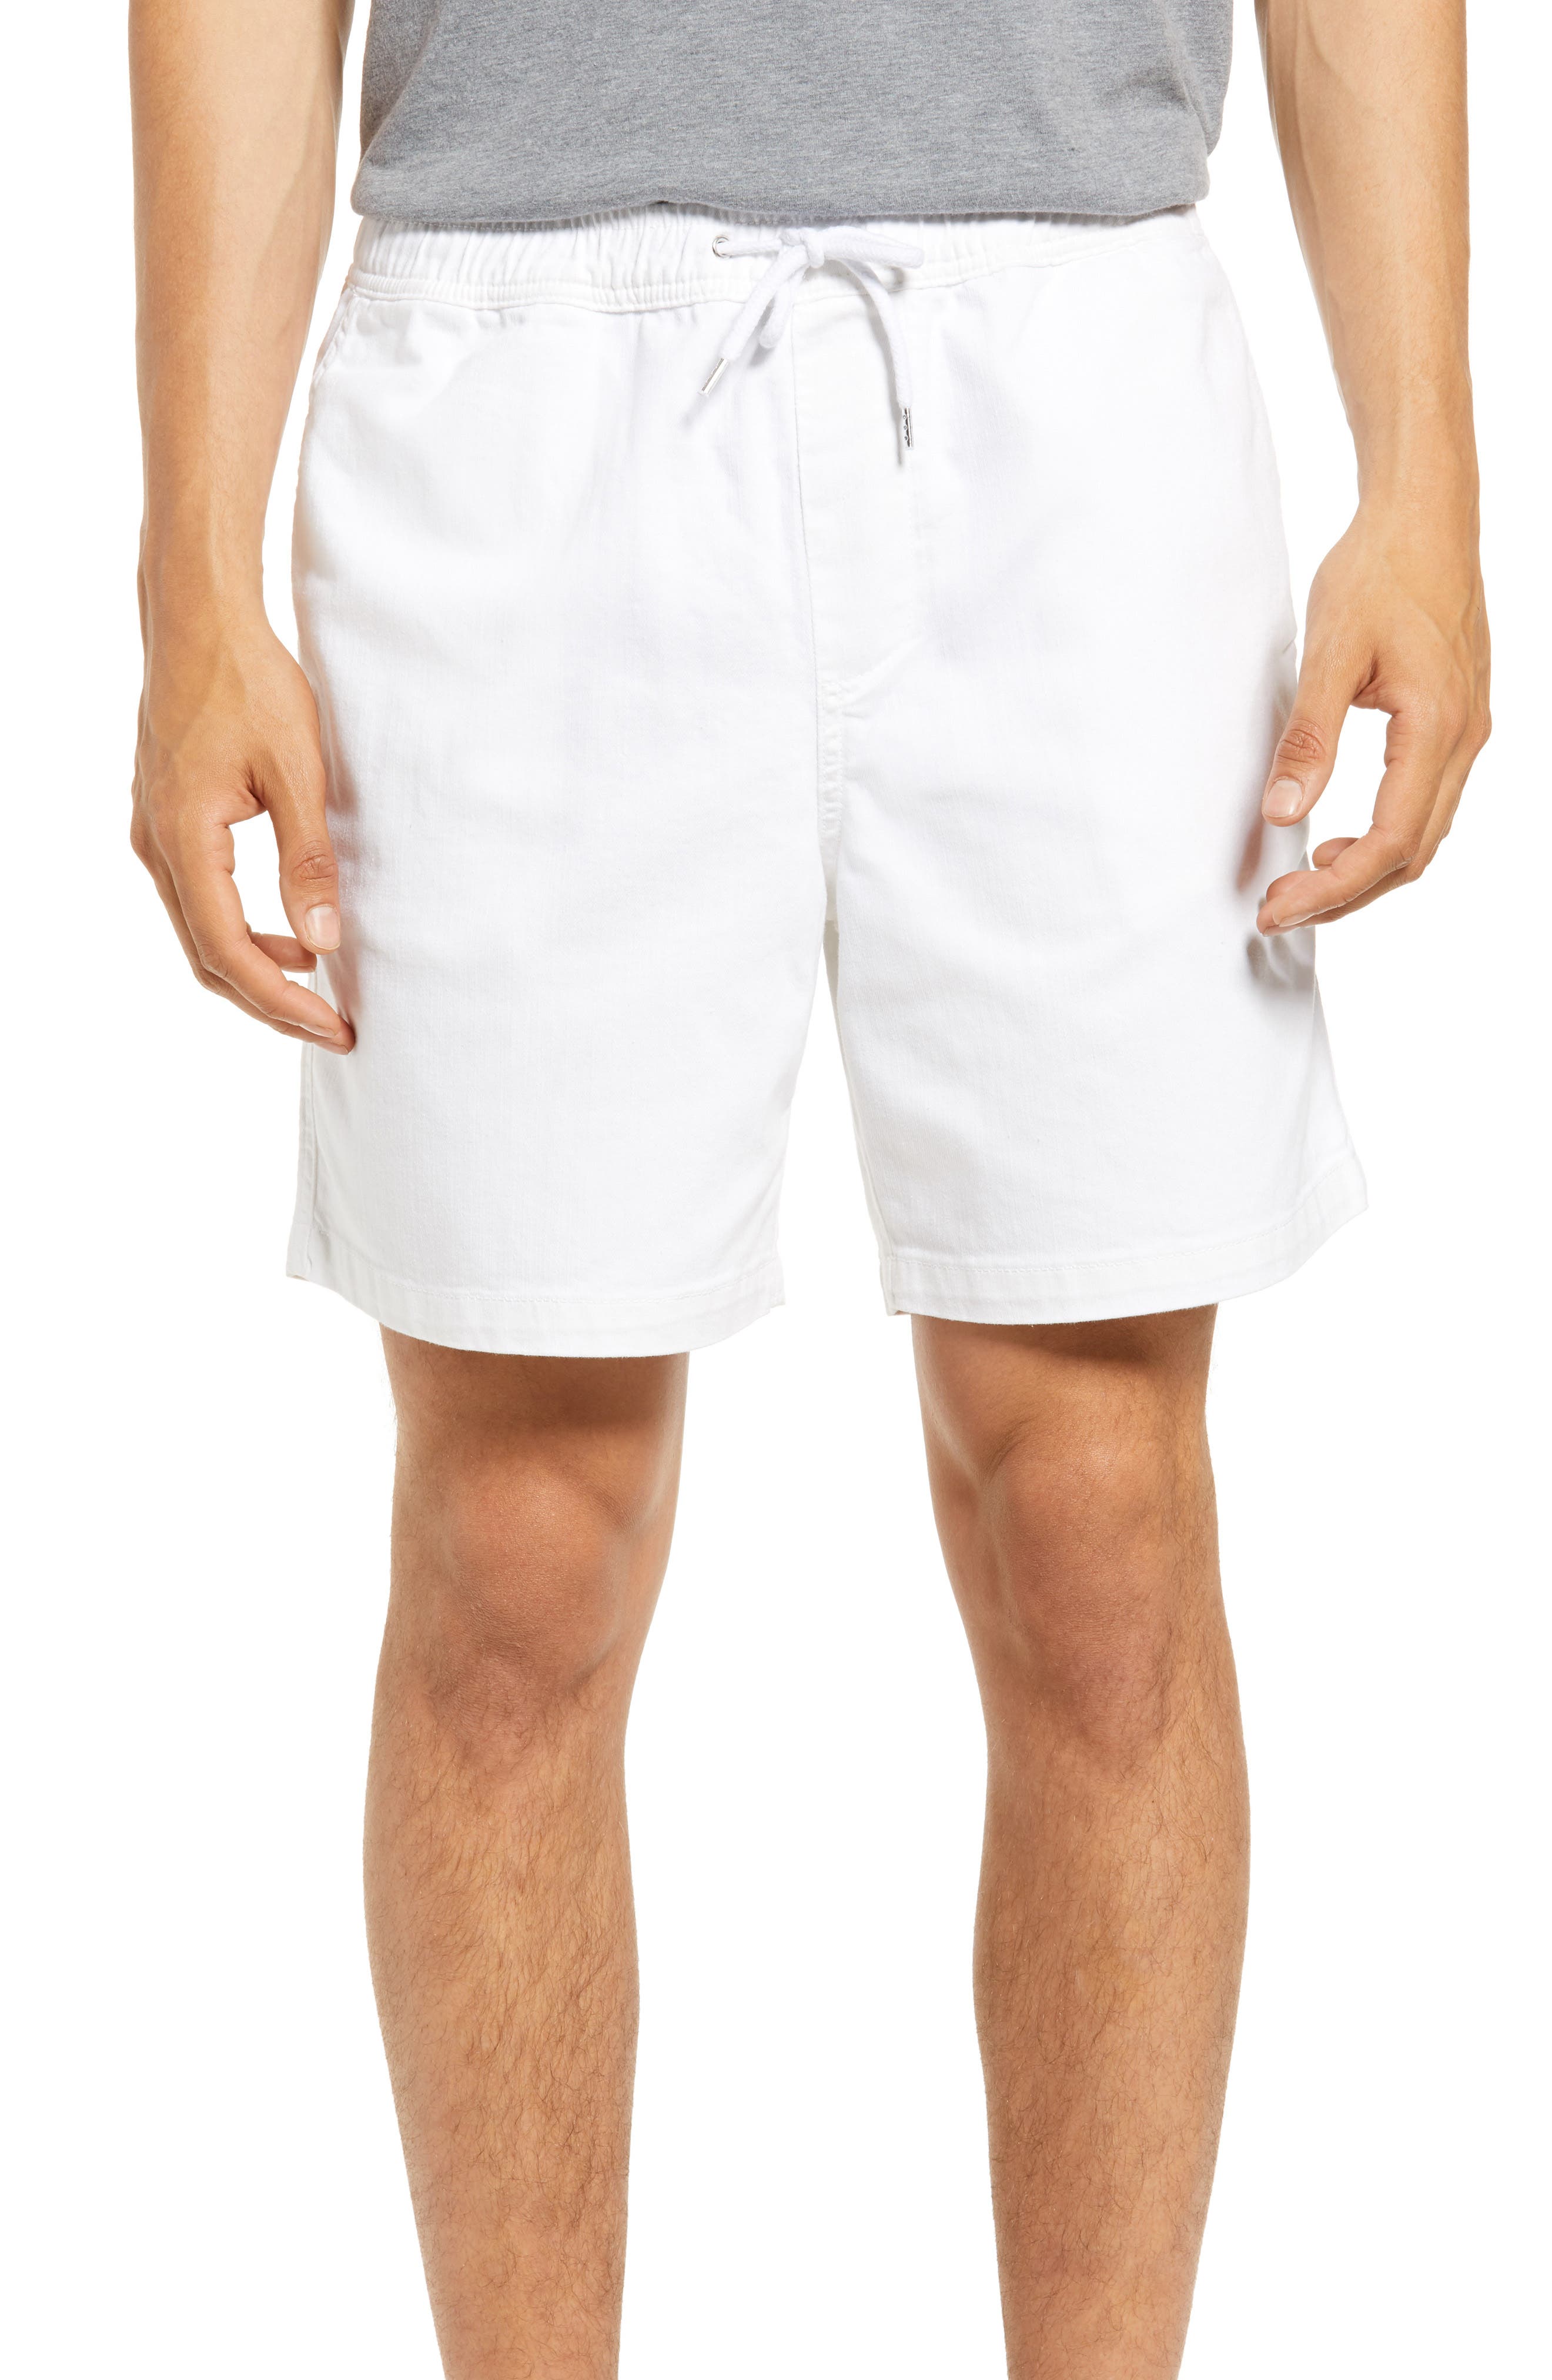 sweat shorts men fashion